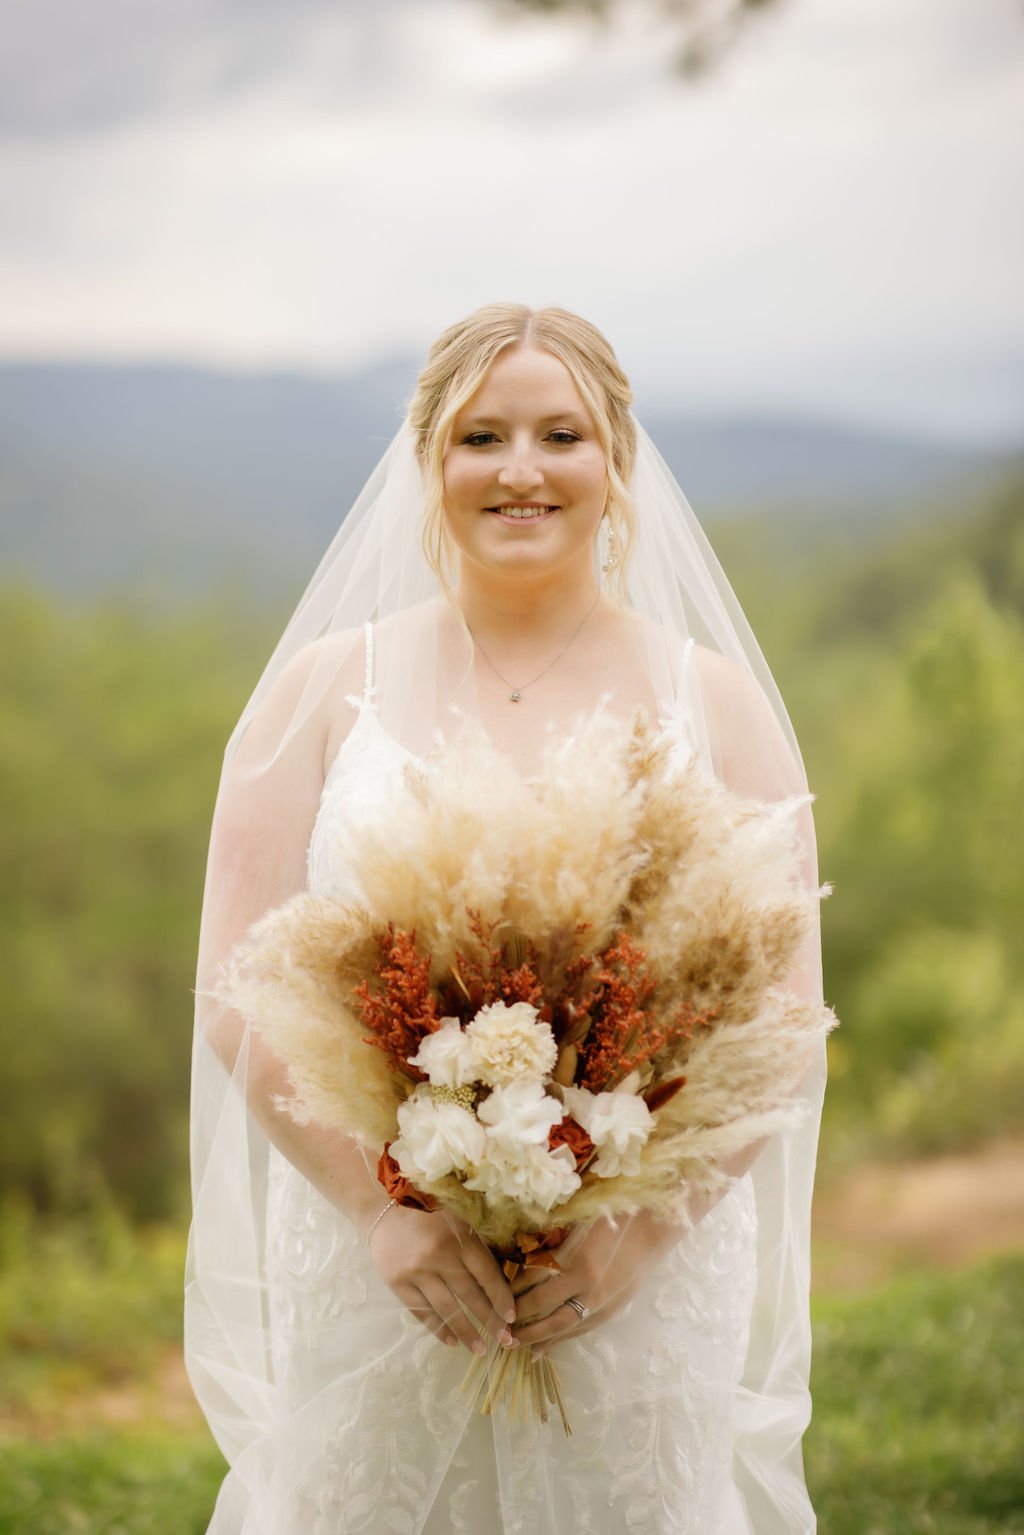 gatlinburg-photographer-how-to-get-more-variety-in-your-gatlinburg-wedding-gallery-bride-bouquet